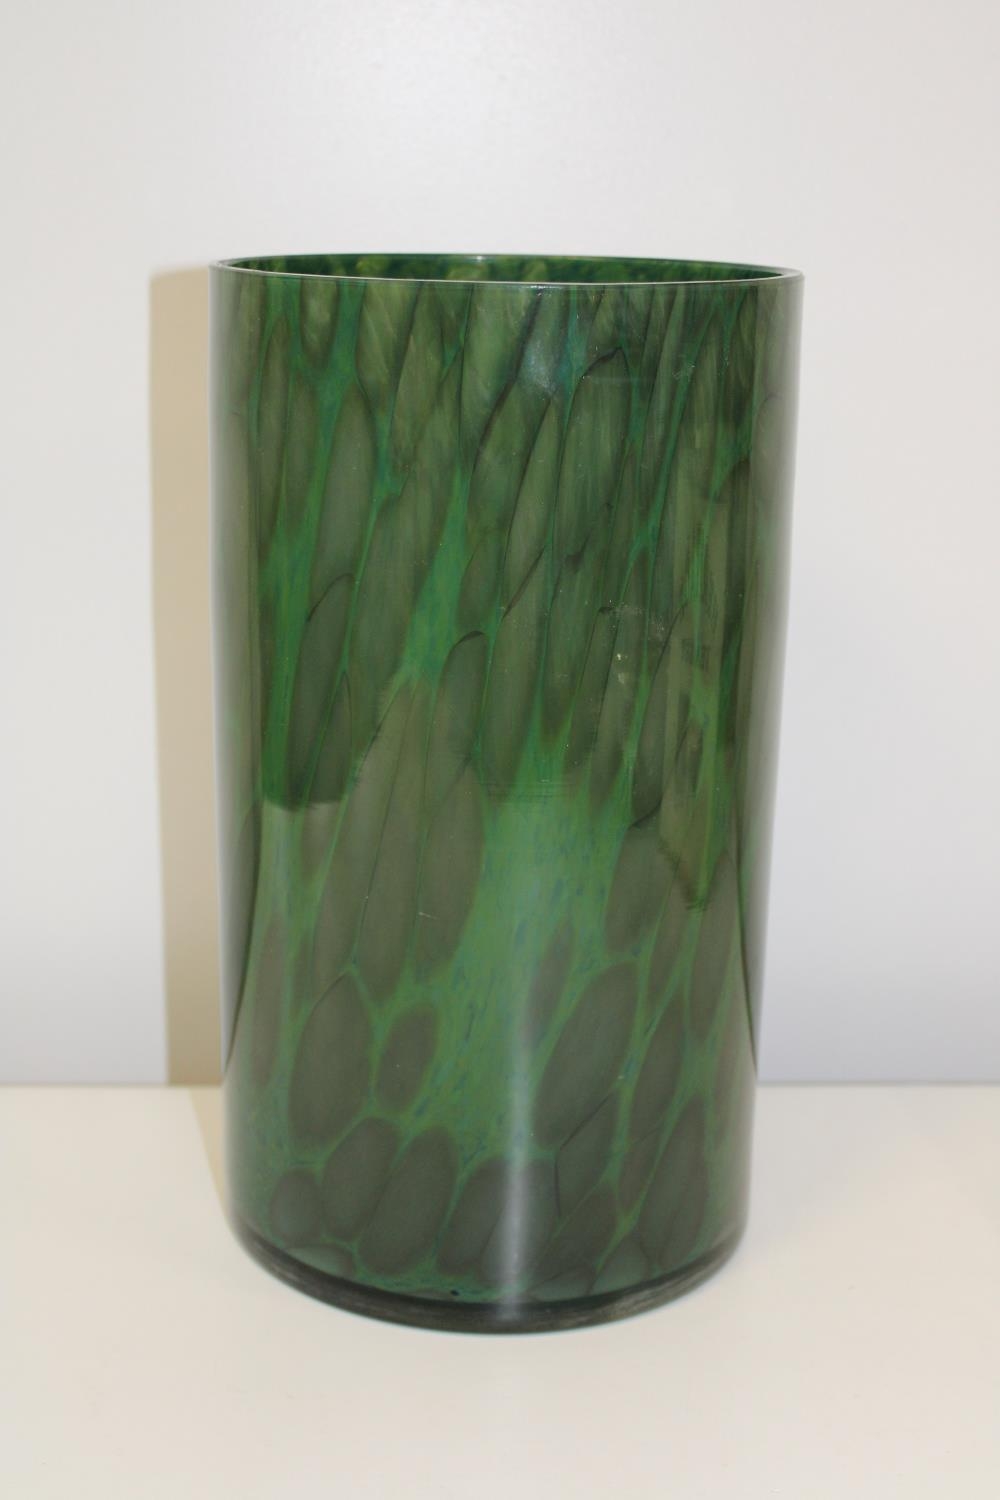 A large green art glass vase h30 d16cm